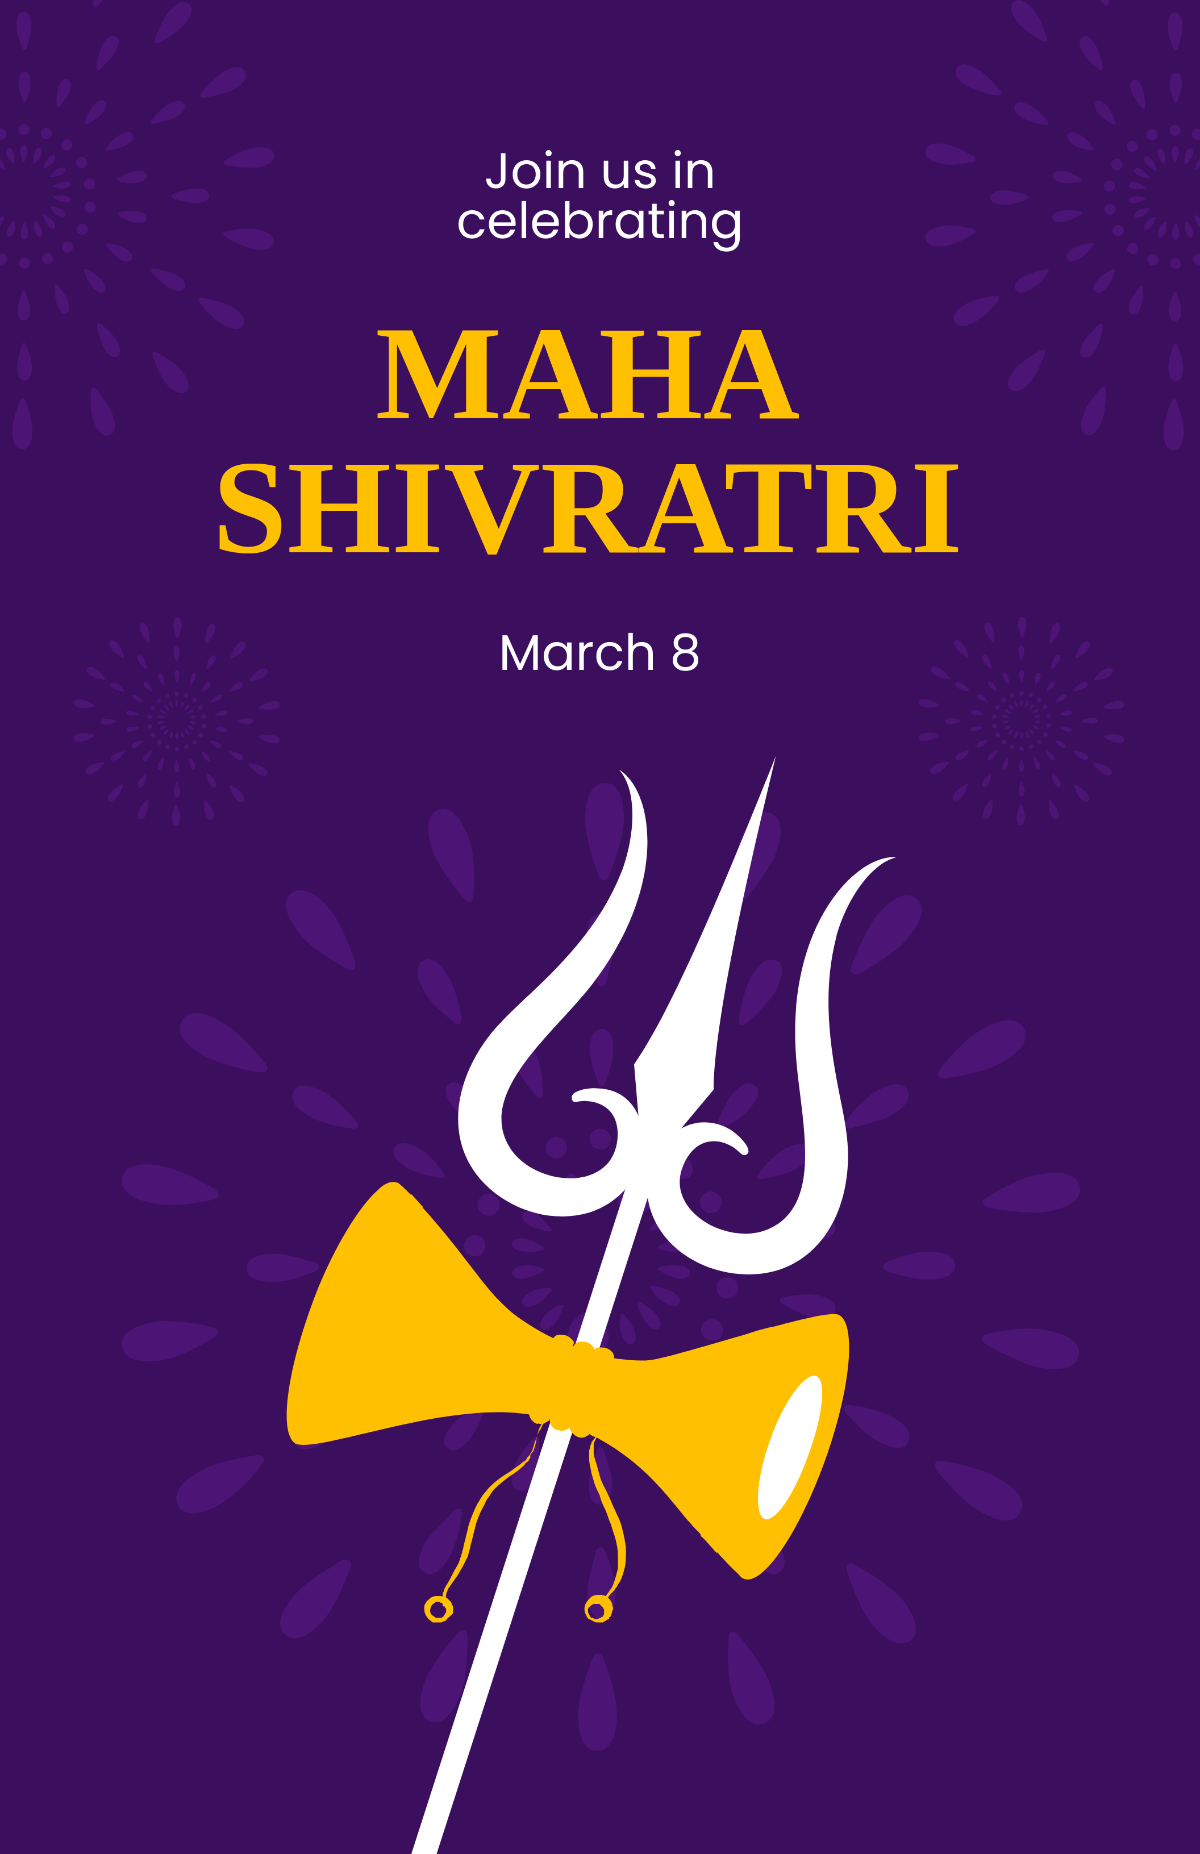 Free Maha Shivratri Event Poster Template